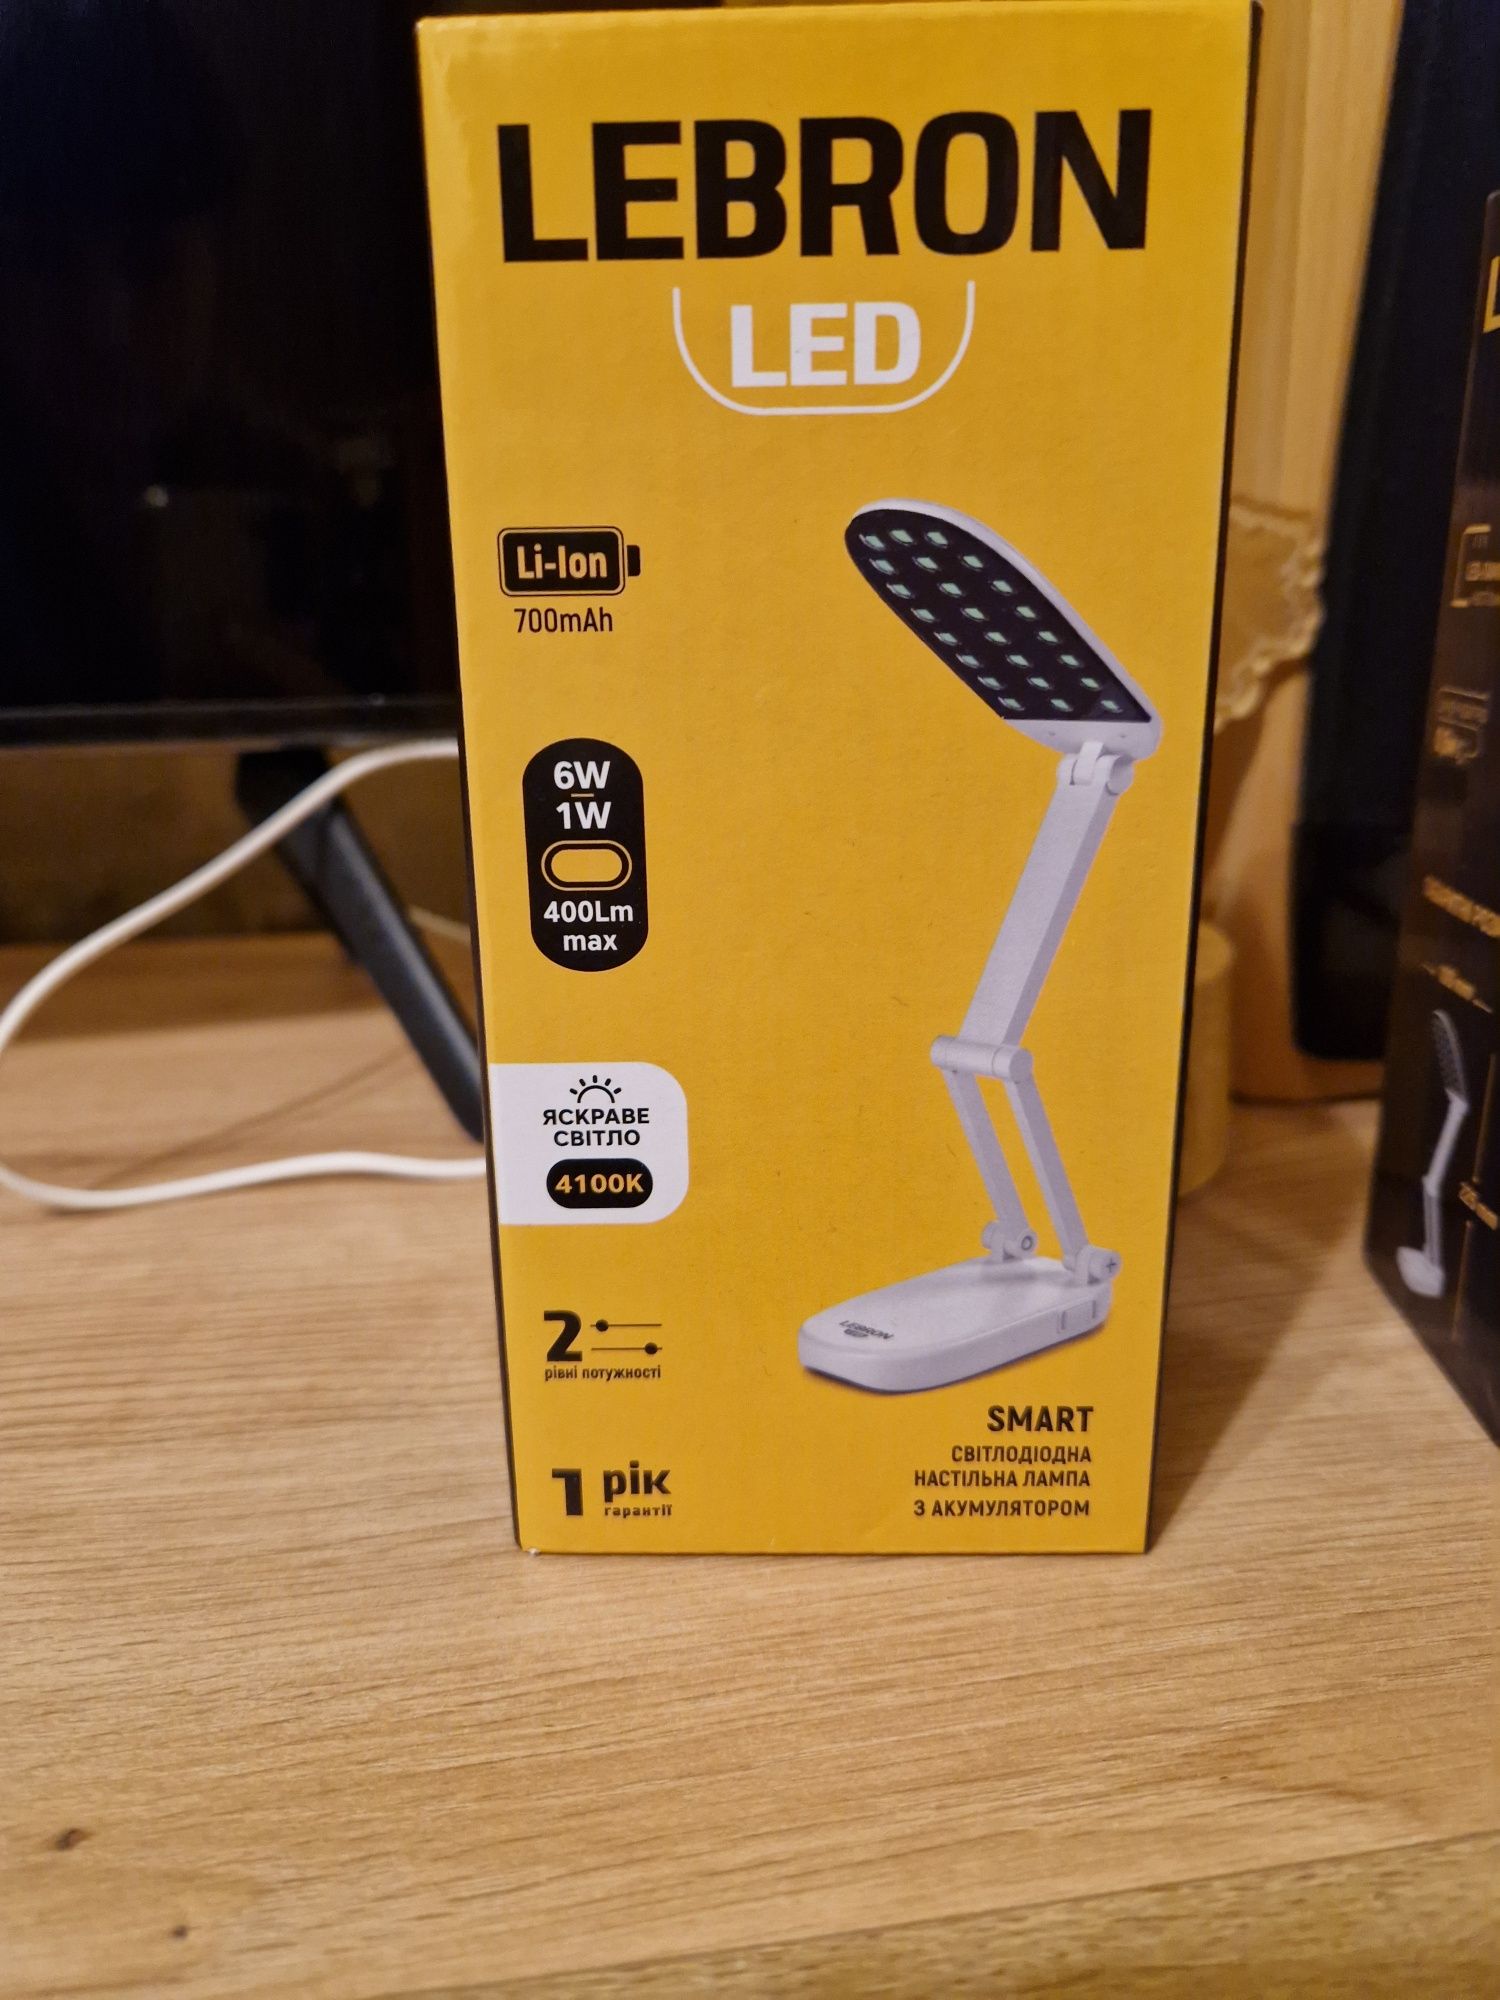 Продам новую лампу